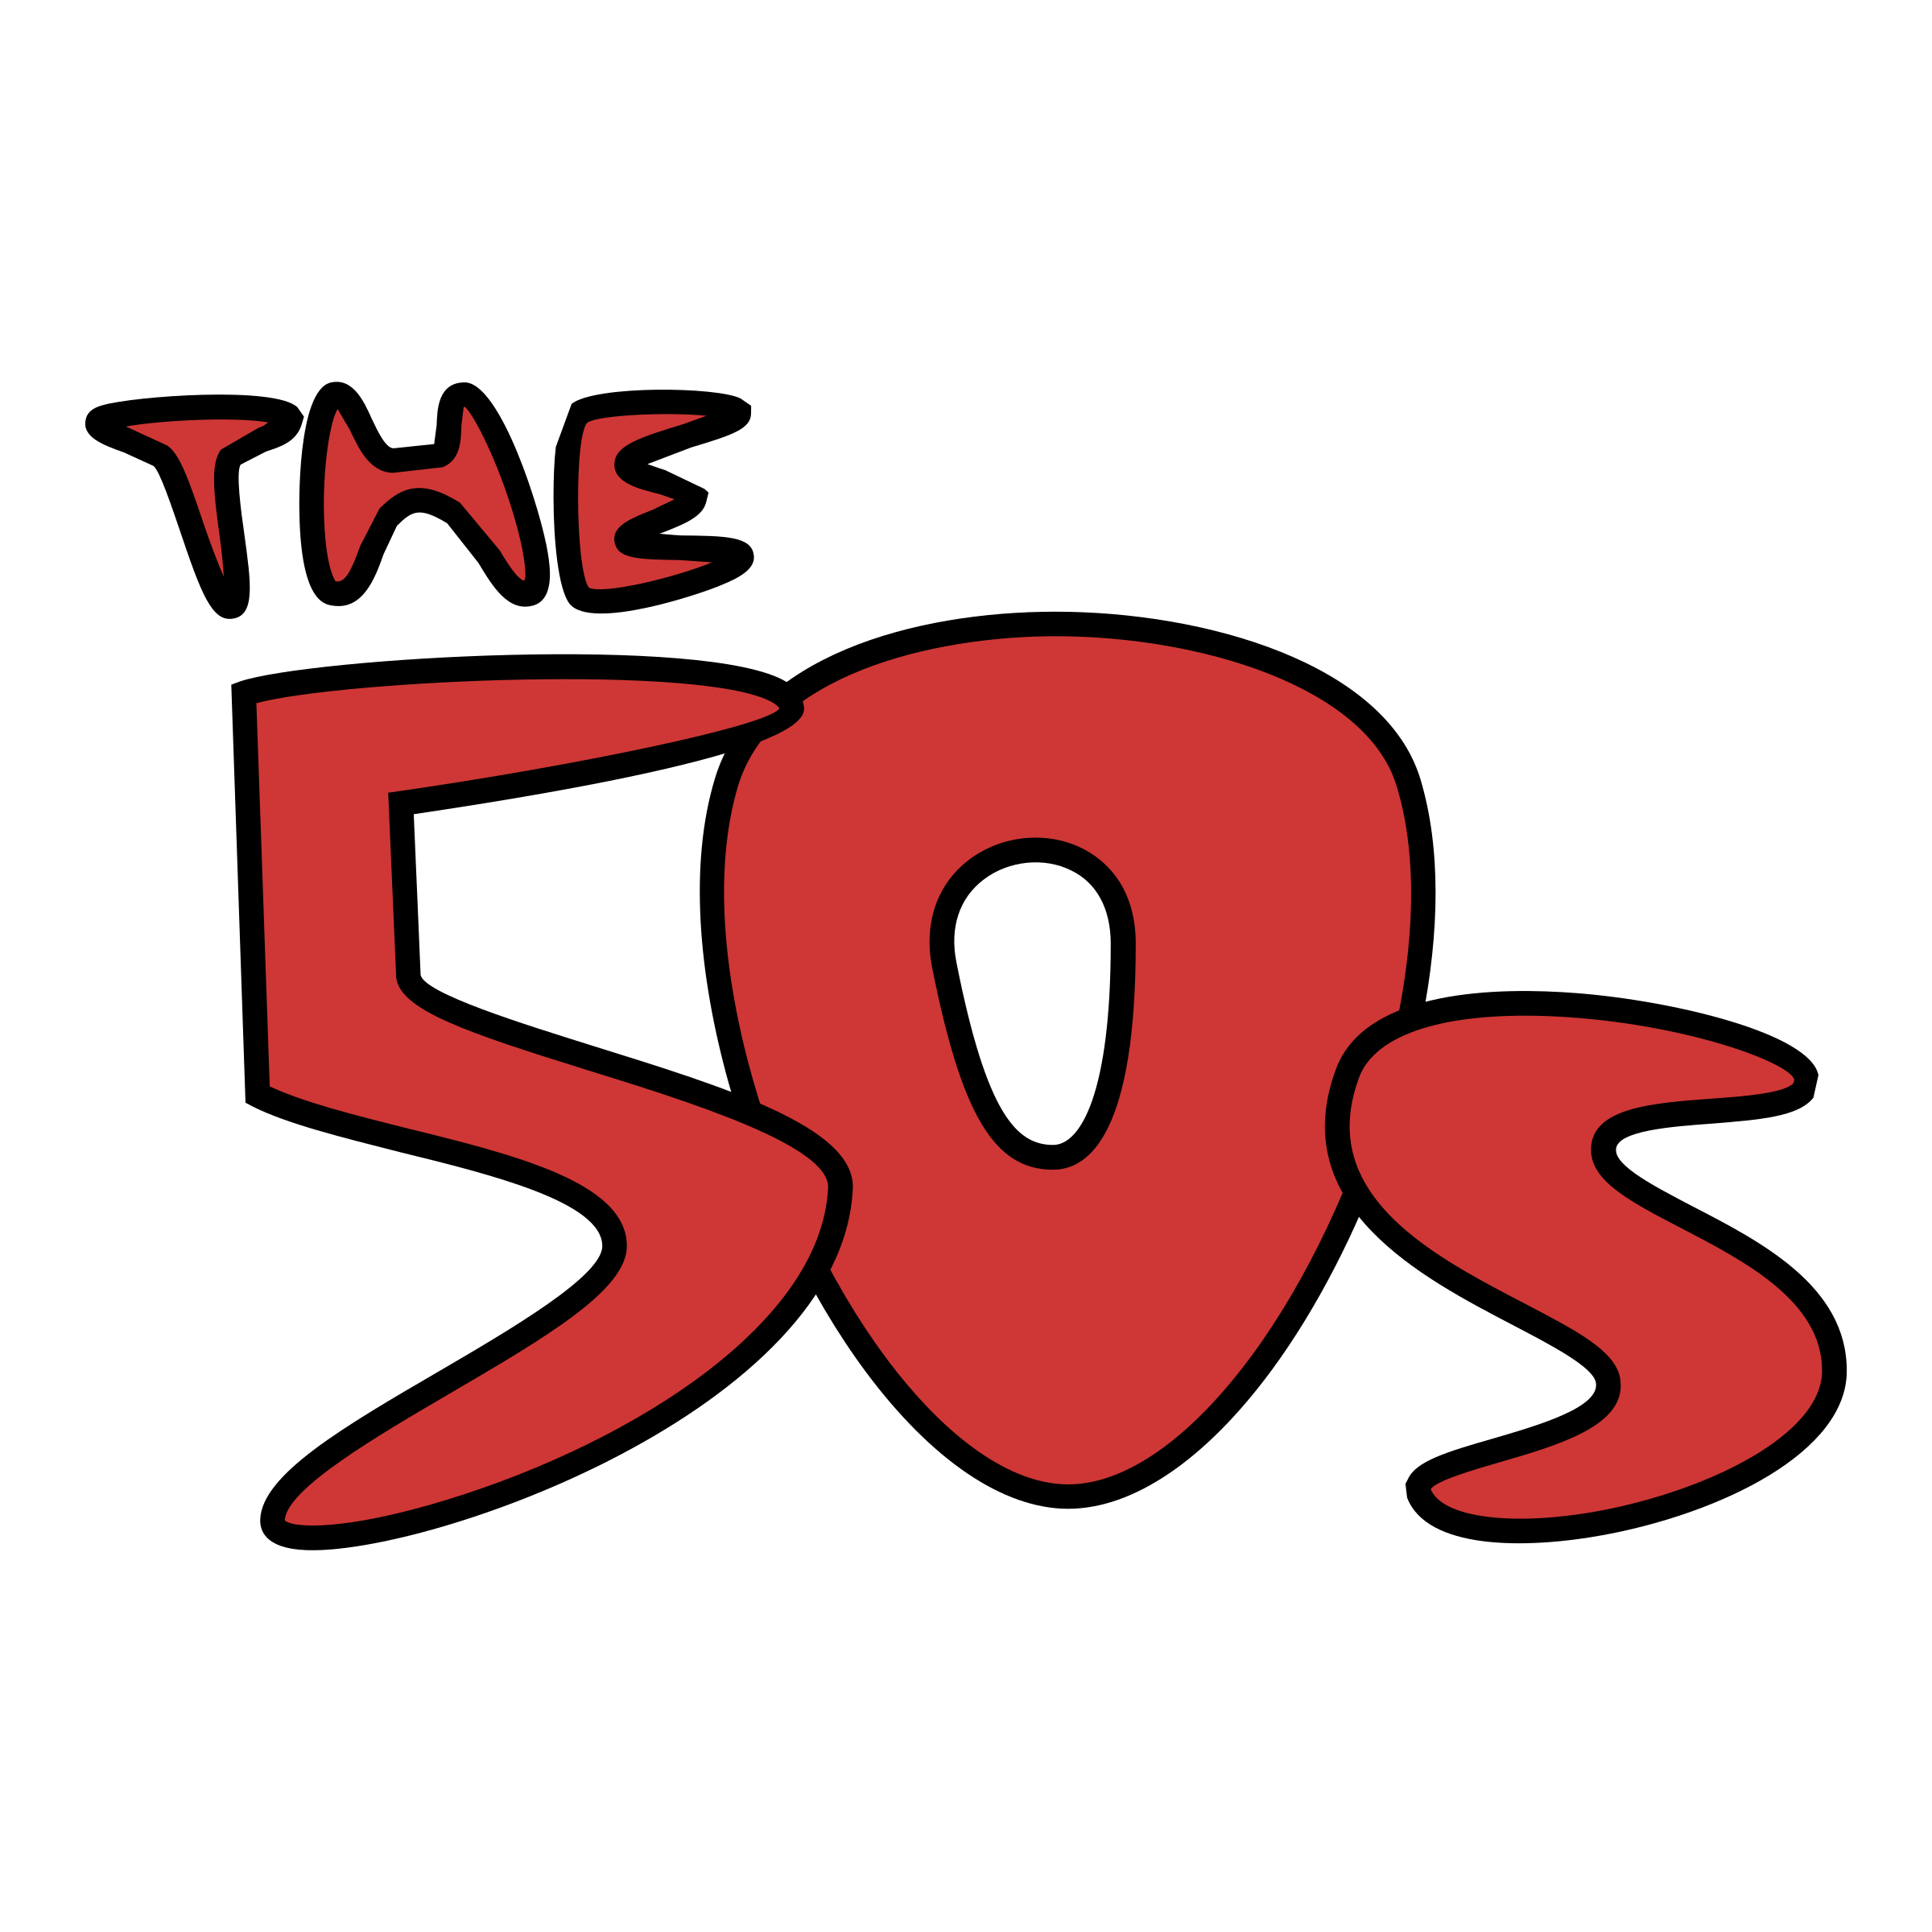 50s Logo - The 50's Logo PNG Transparent & SVG Vector